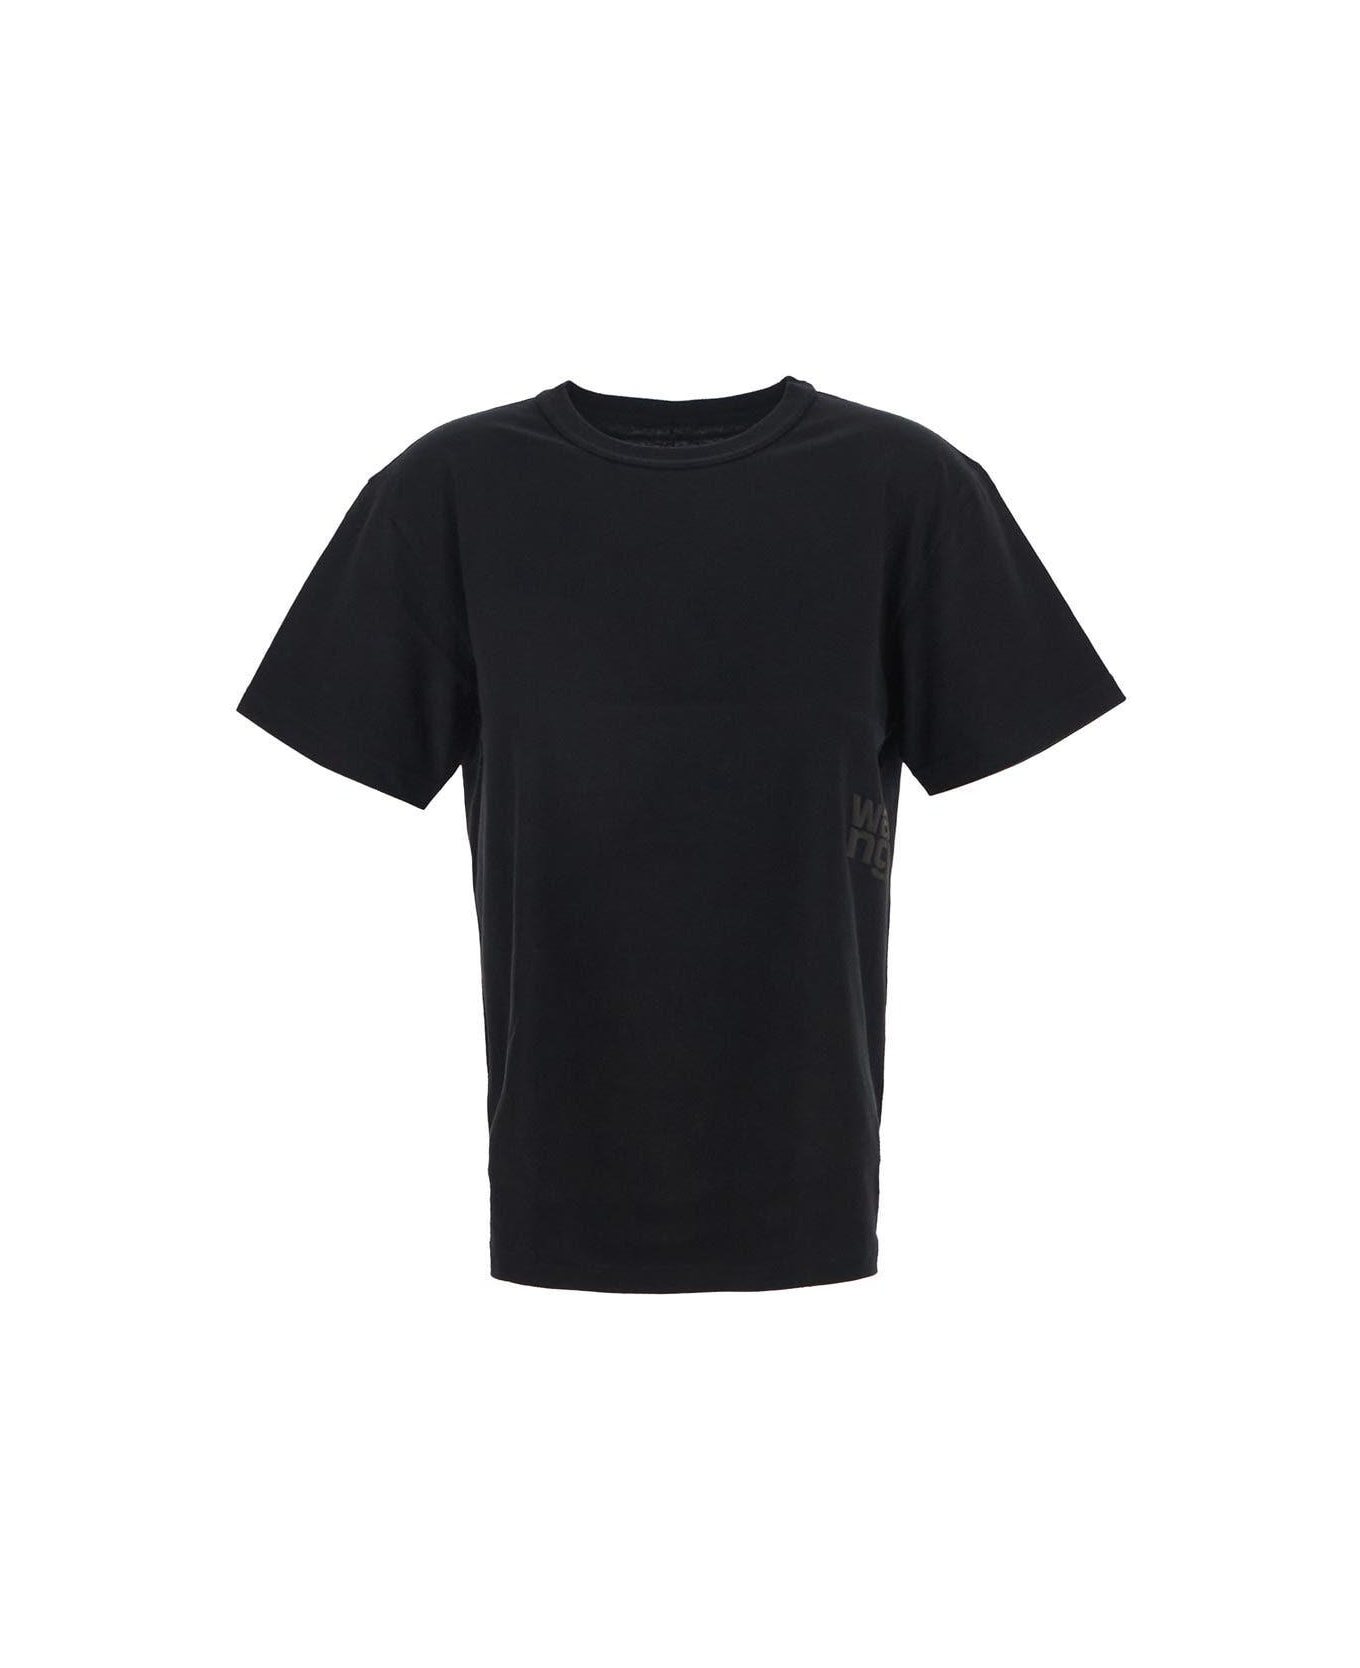 Alexander Wang Black T-shirt - Black